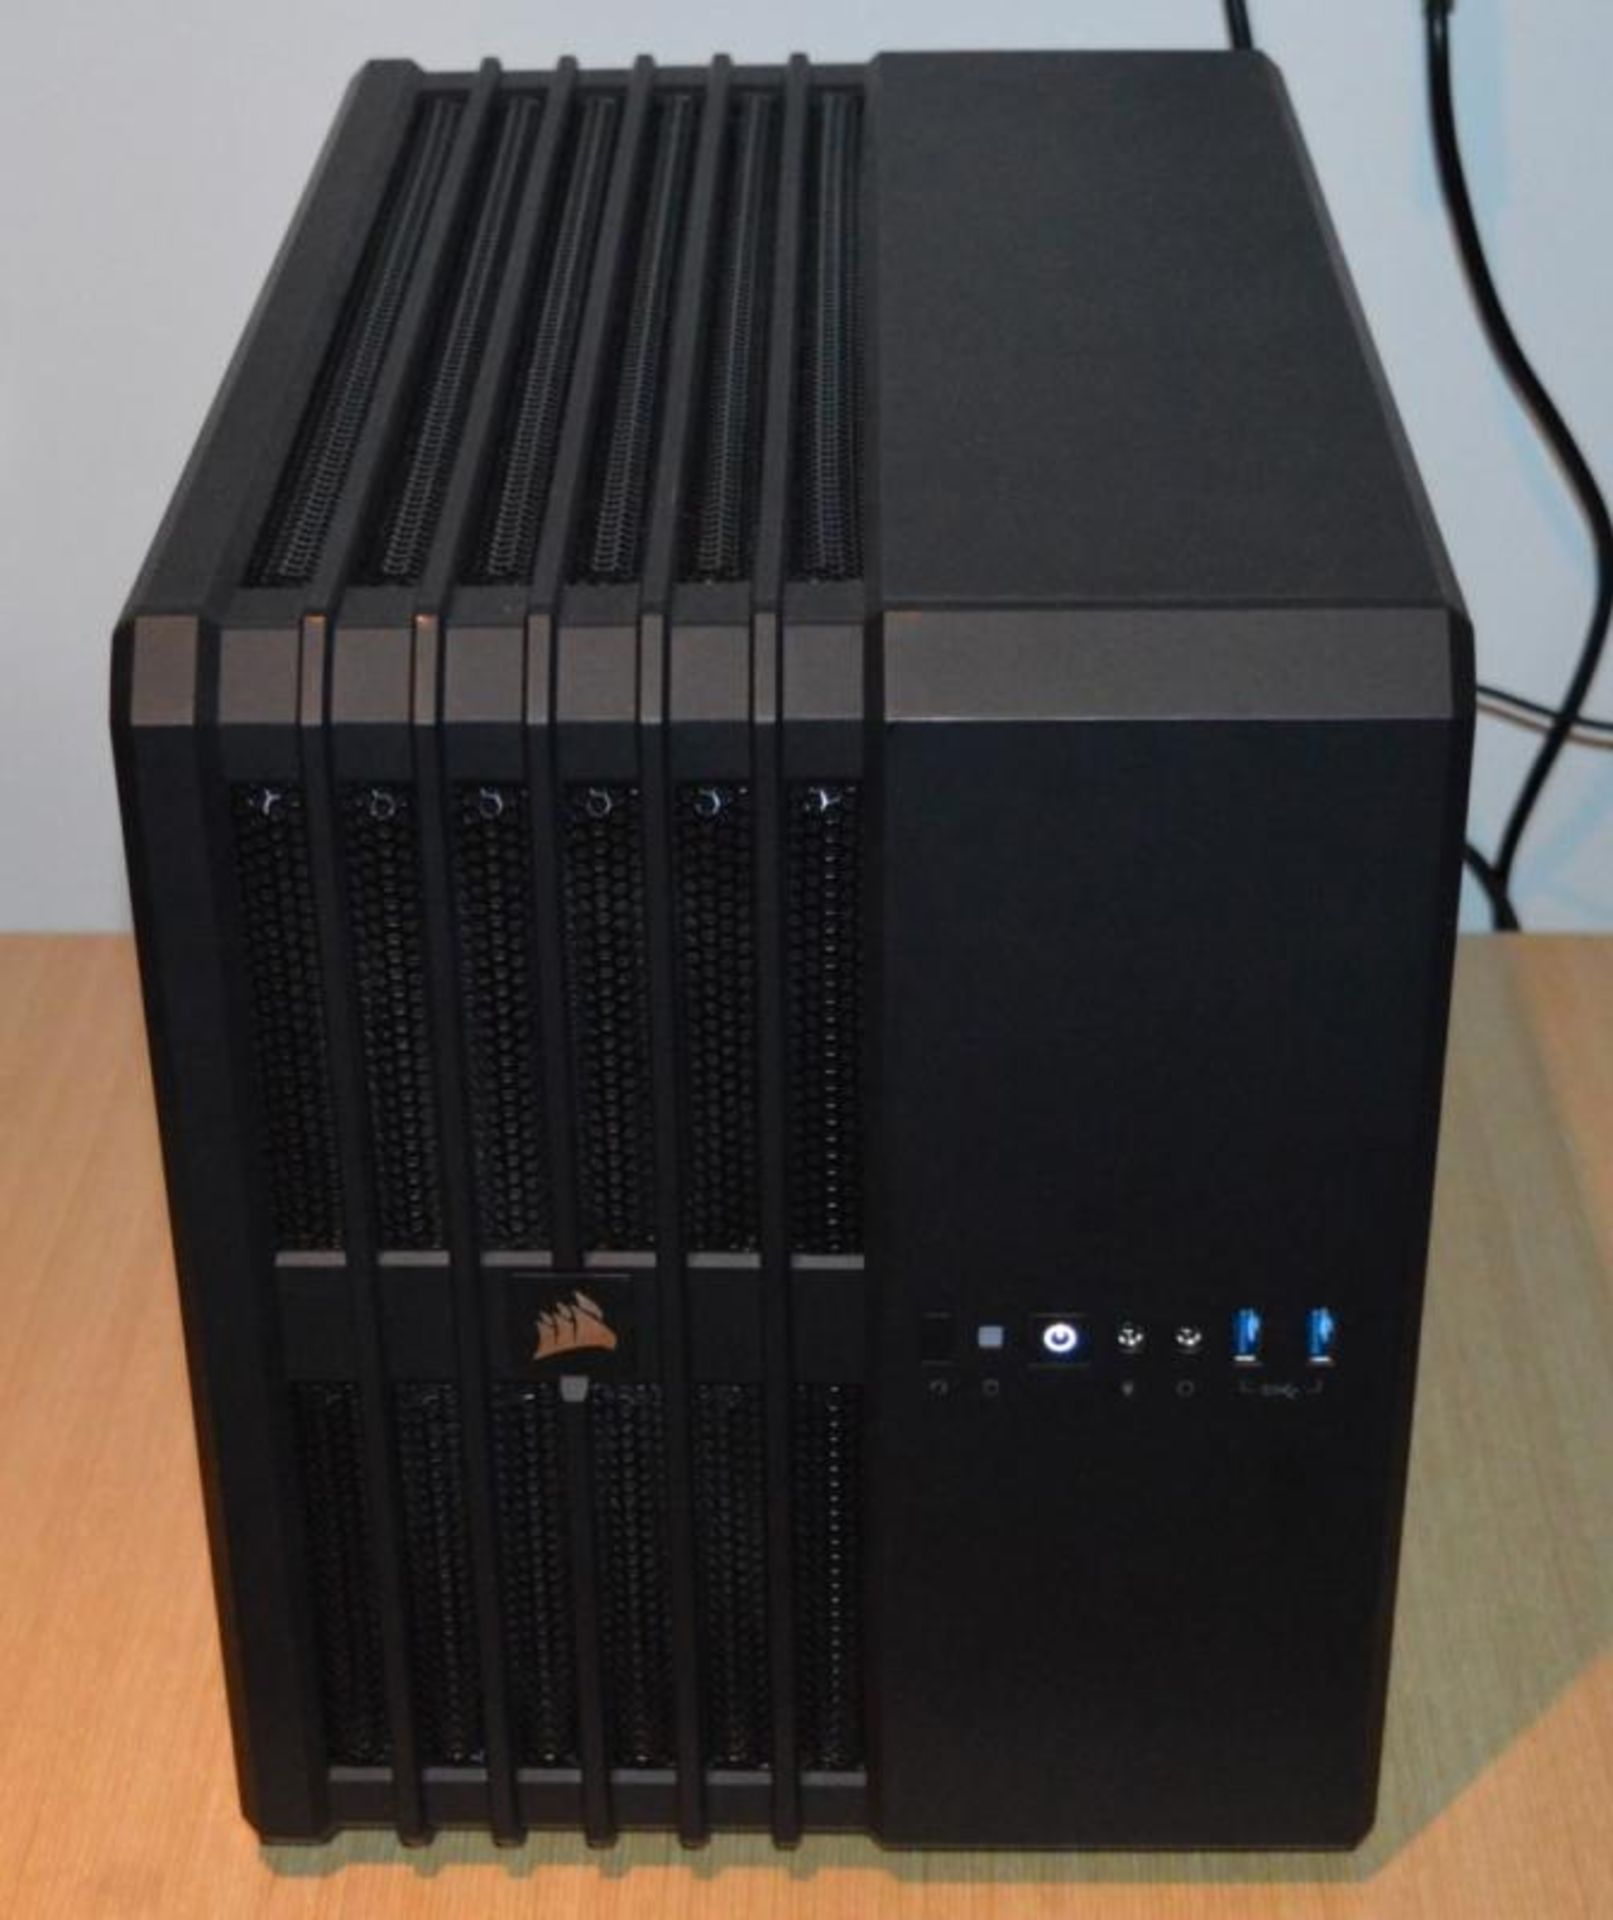 1 x Custom Built Desktop Computer - Features Latest Intel Skylake Processor, 8gb DDR4 Ram, 250gb SSD - Image 7 of 17